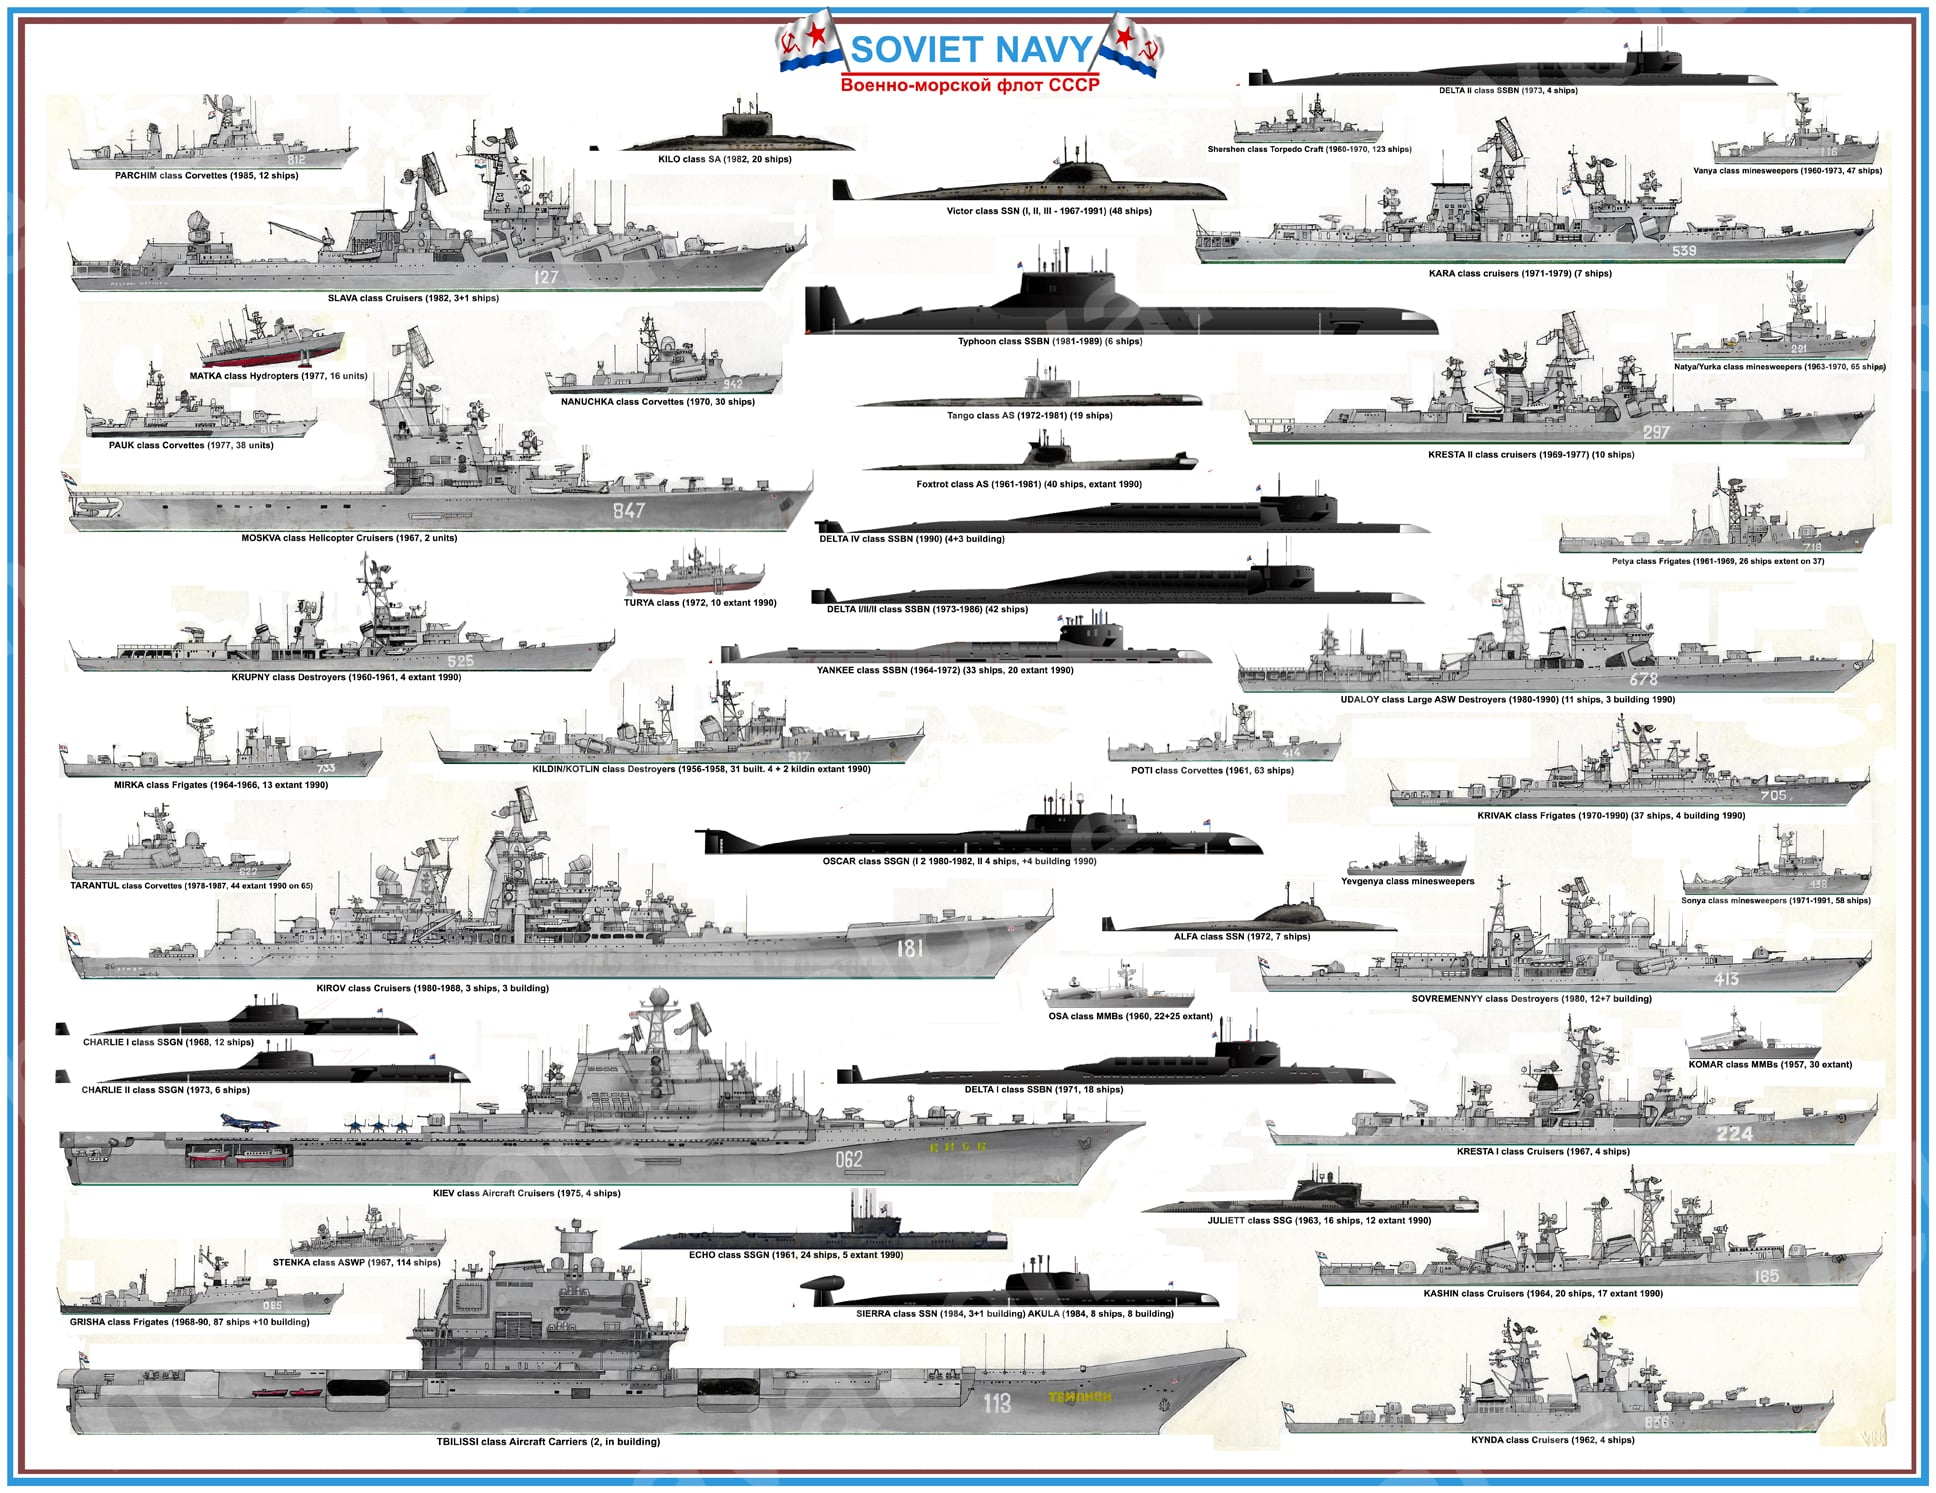 Soviet navy